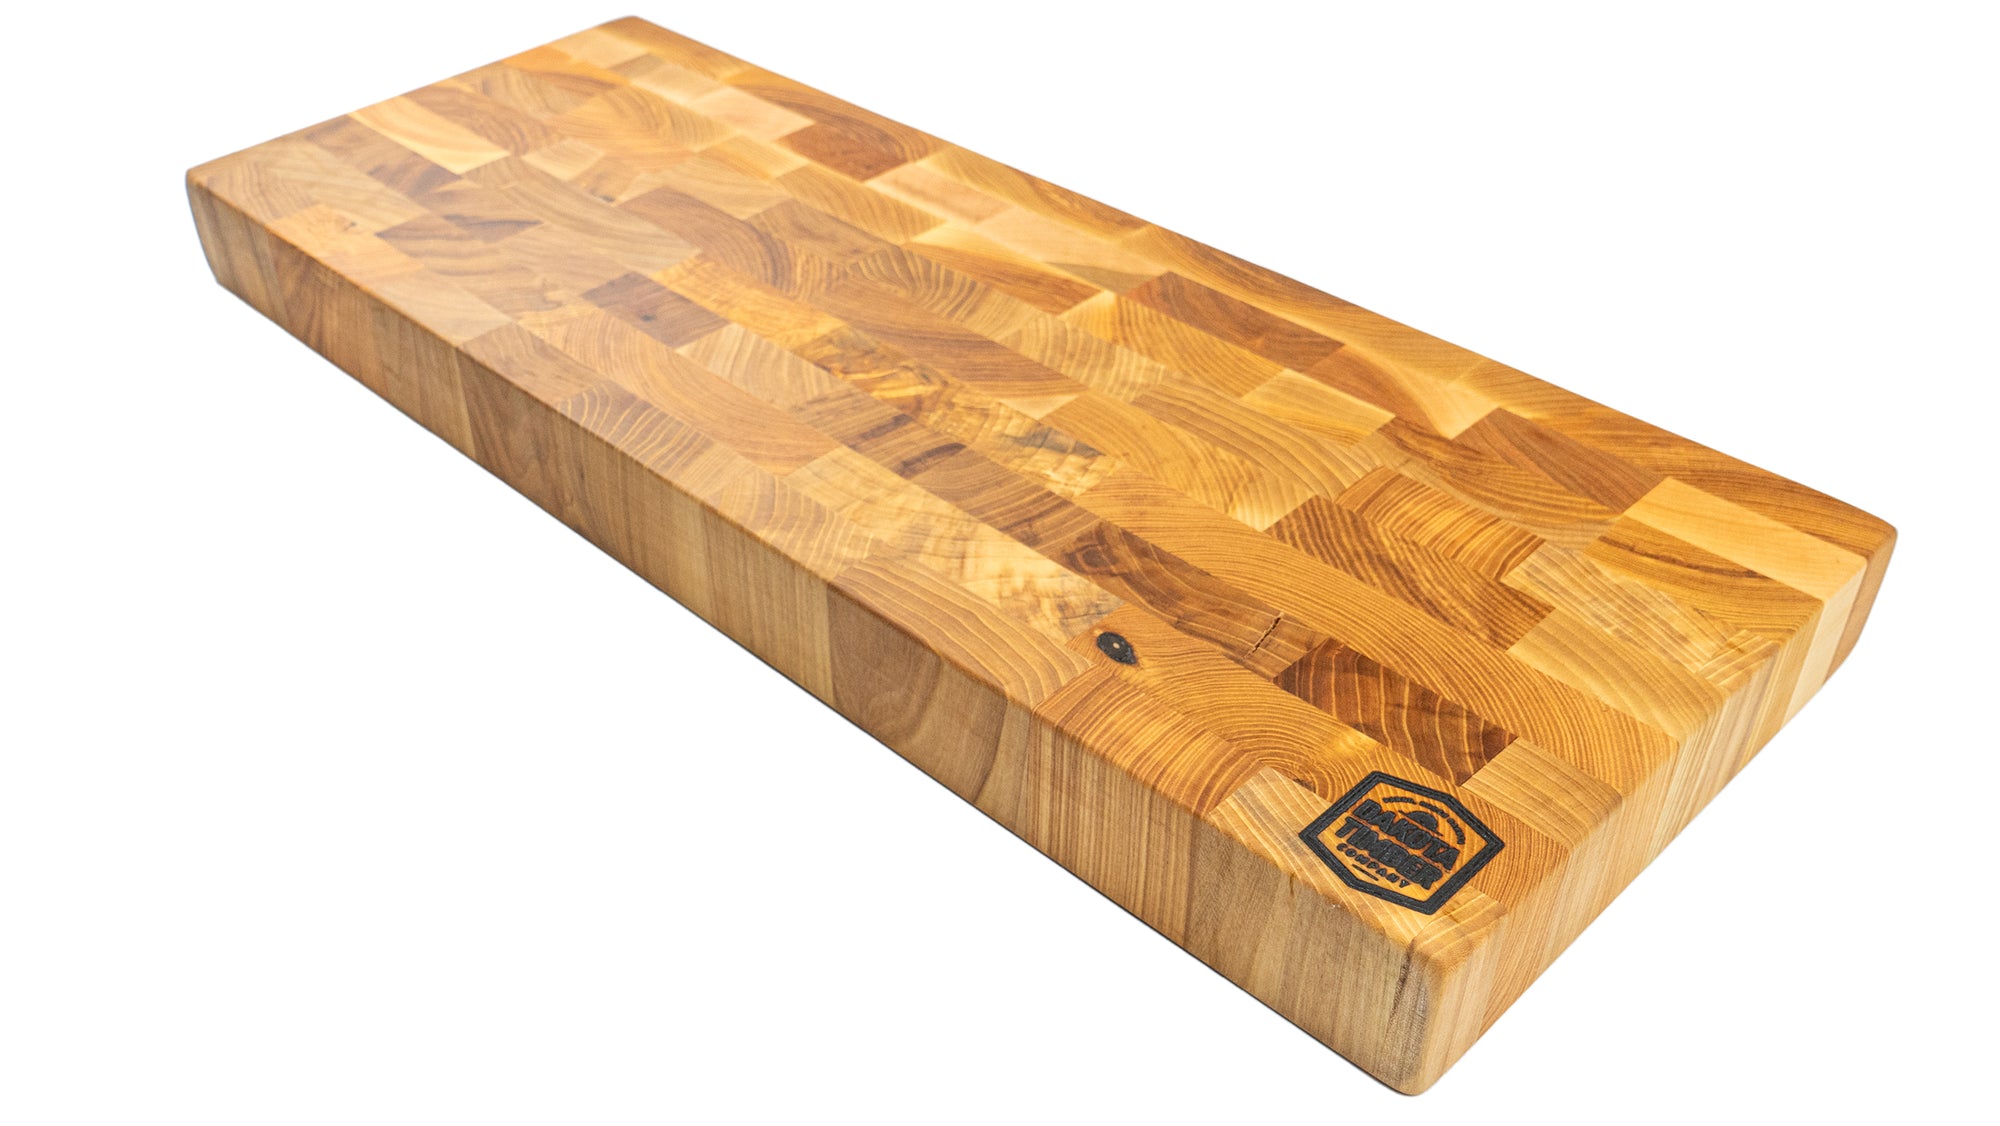 11.25" x 28.75" x 2.25" End Grain Cutting Board - Dakota Timber Co